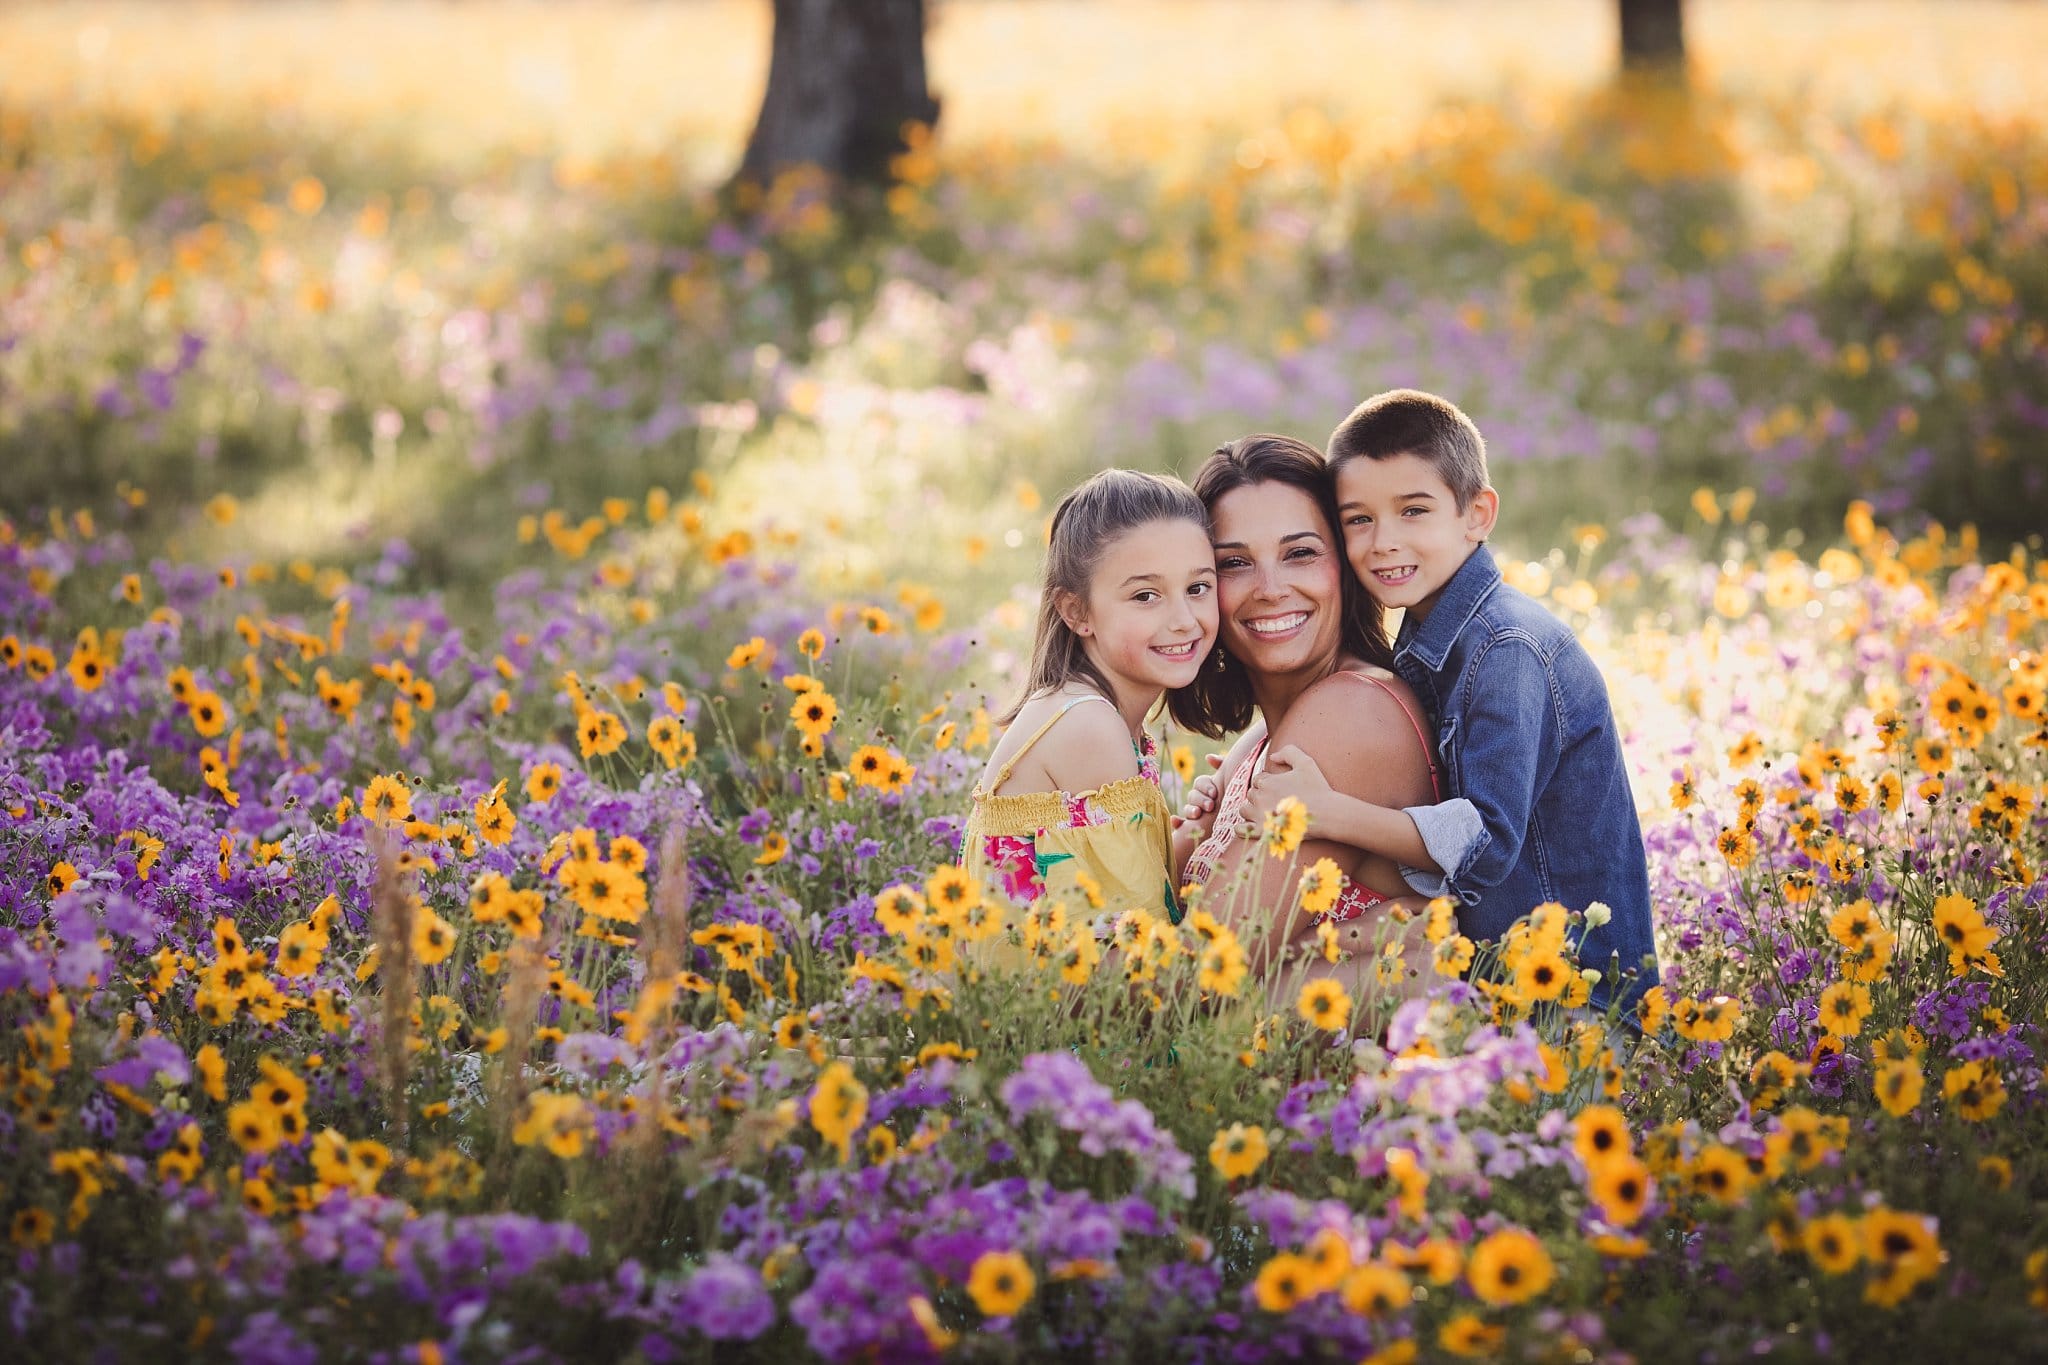 Flower Field Photos in Jacksonville mom and two children in flower field